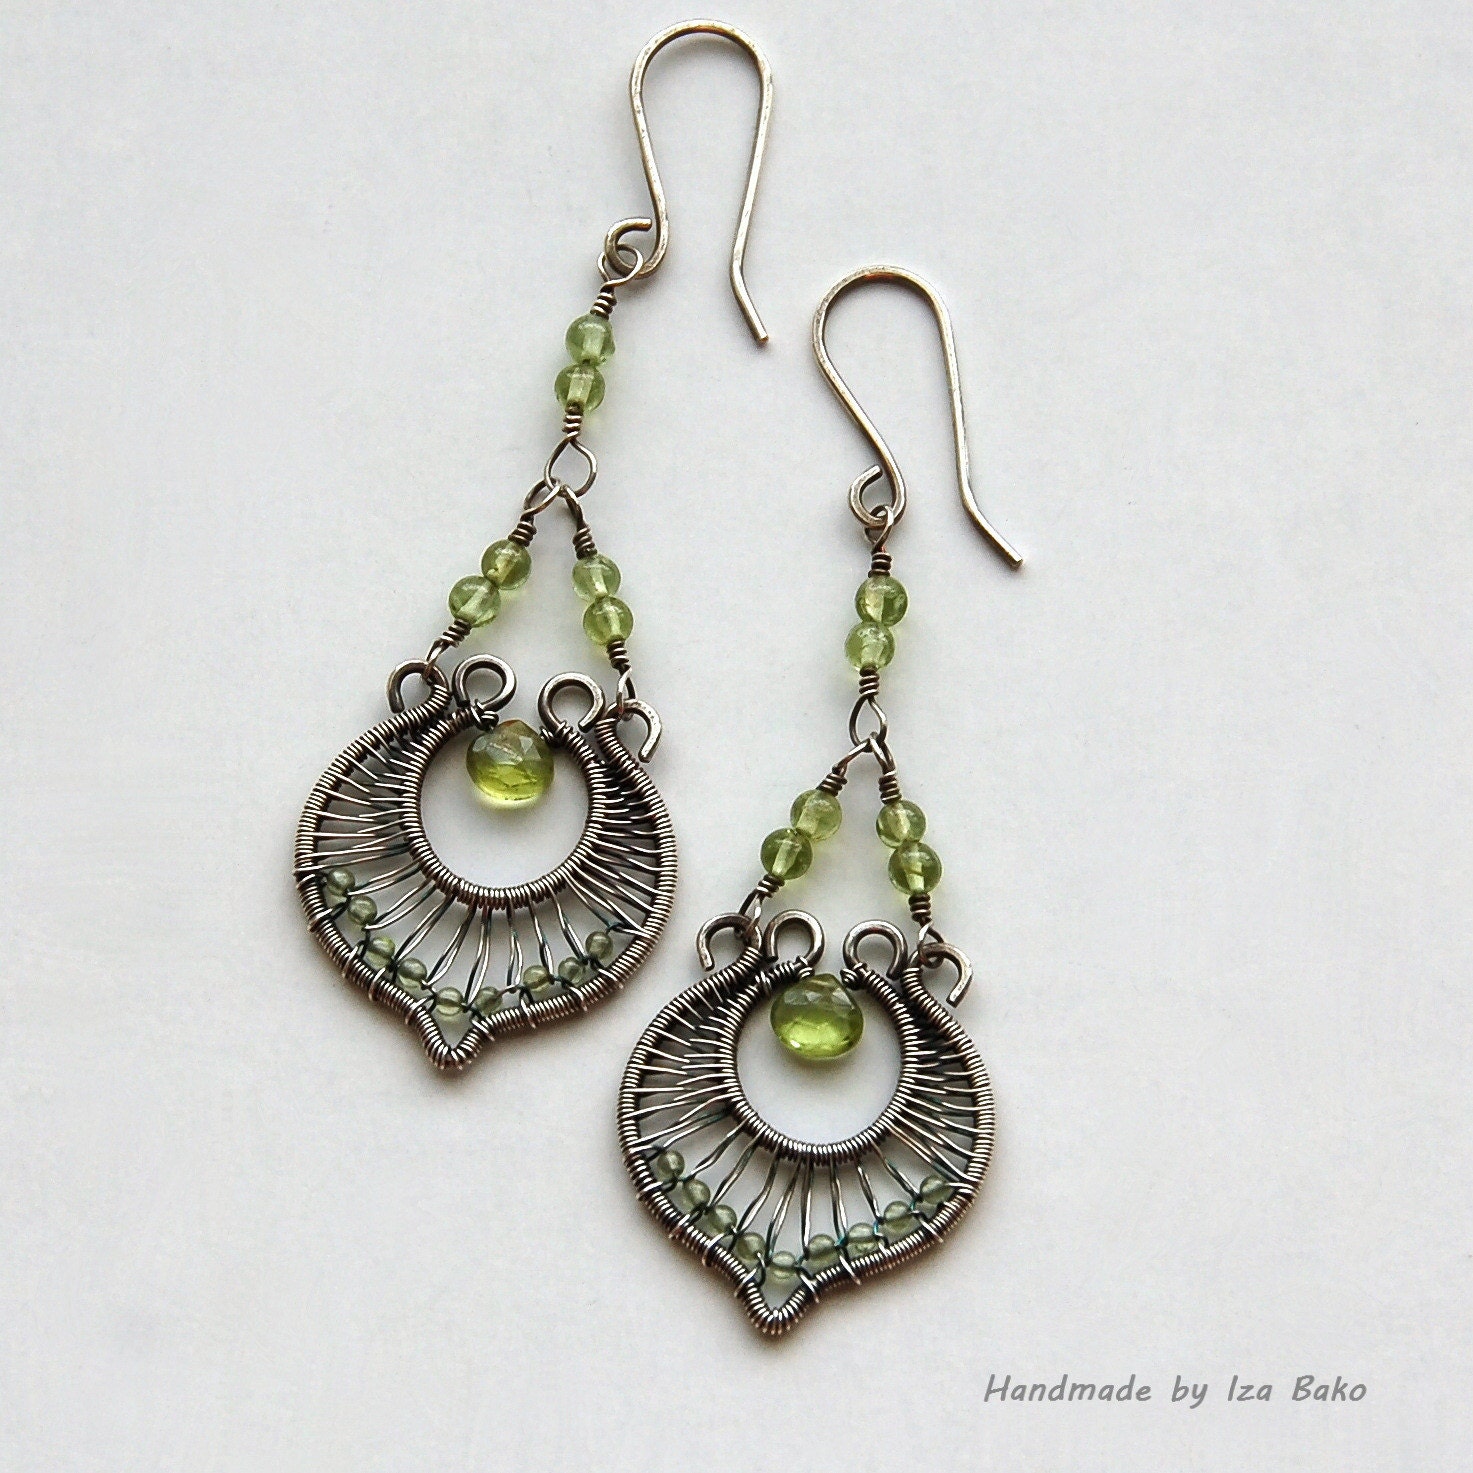 Handmade, Elegant, Original, Wire Wrapped Sterling Silver Chandelier Earrings with Peridot Gemstones